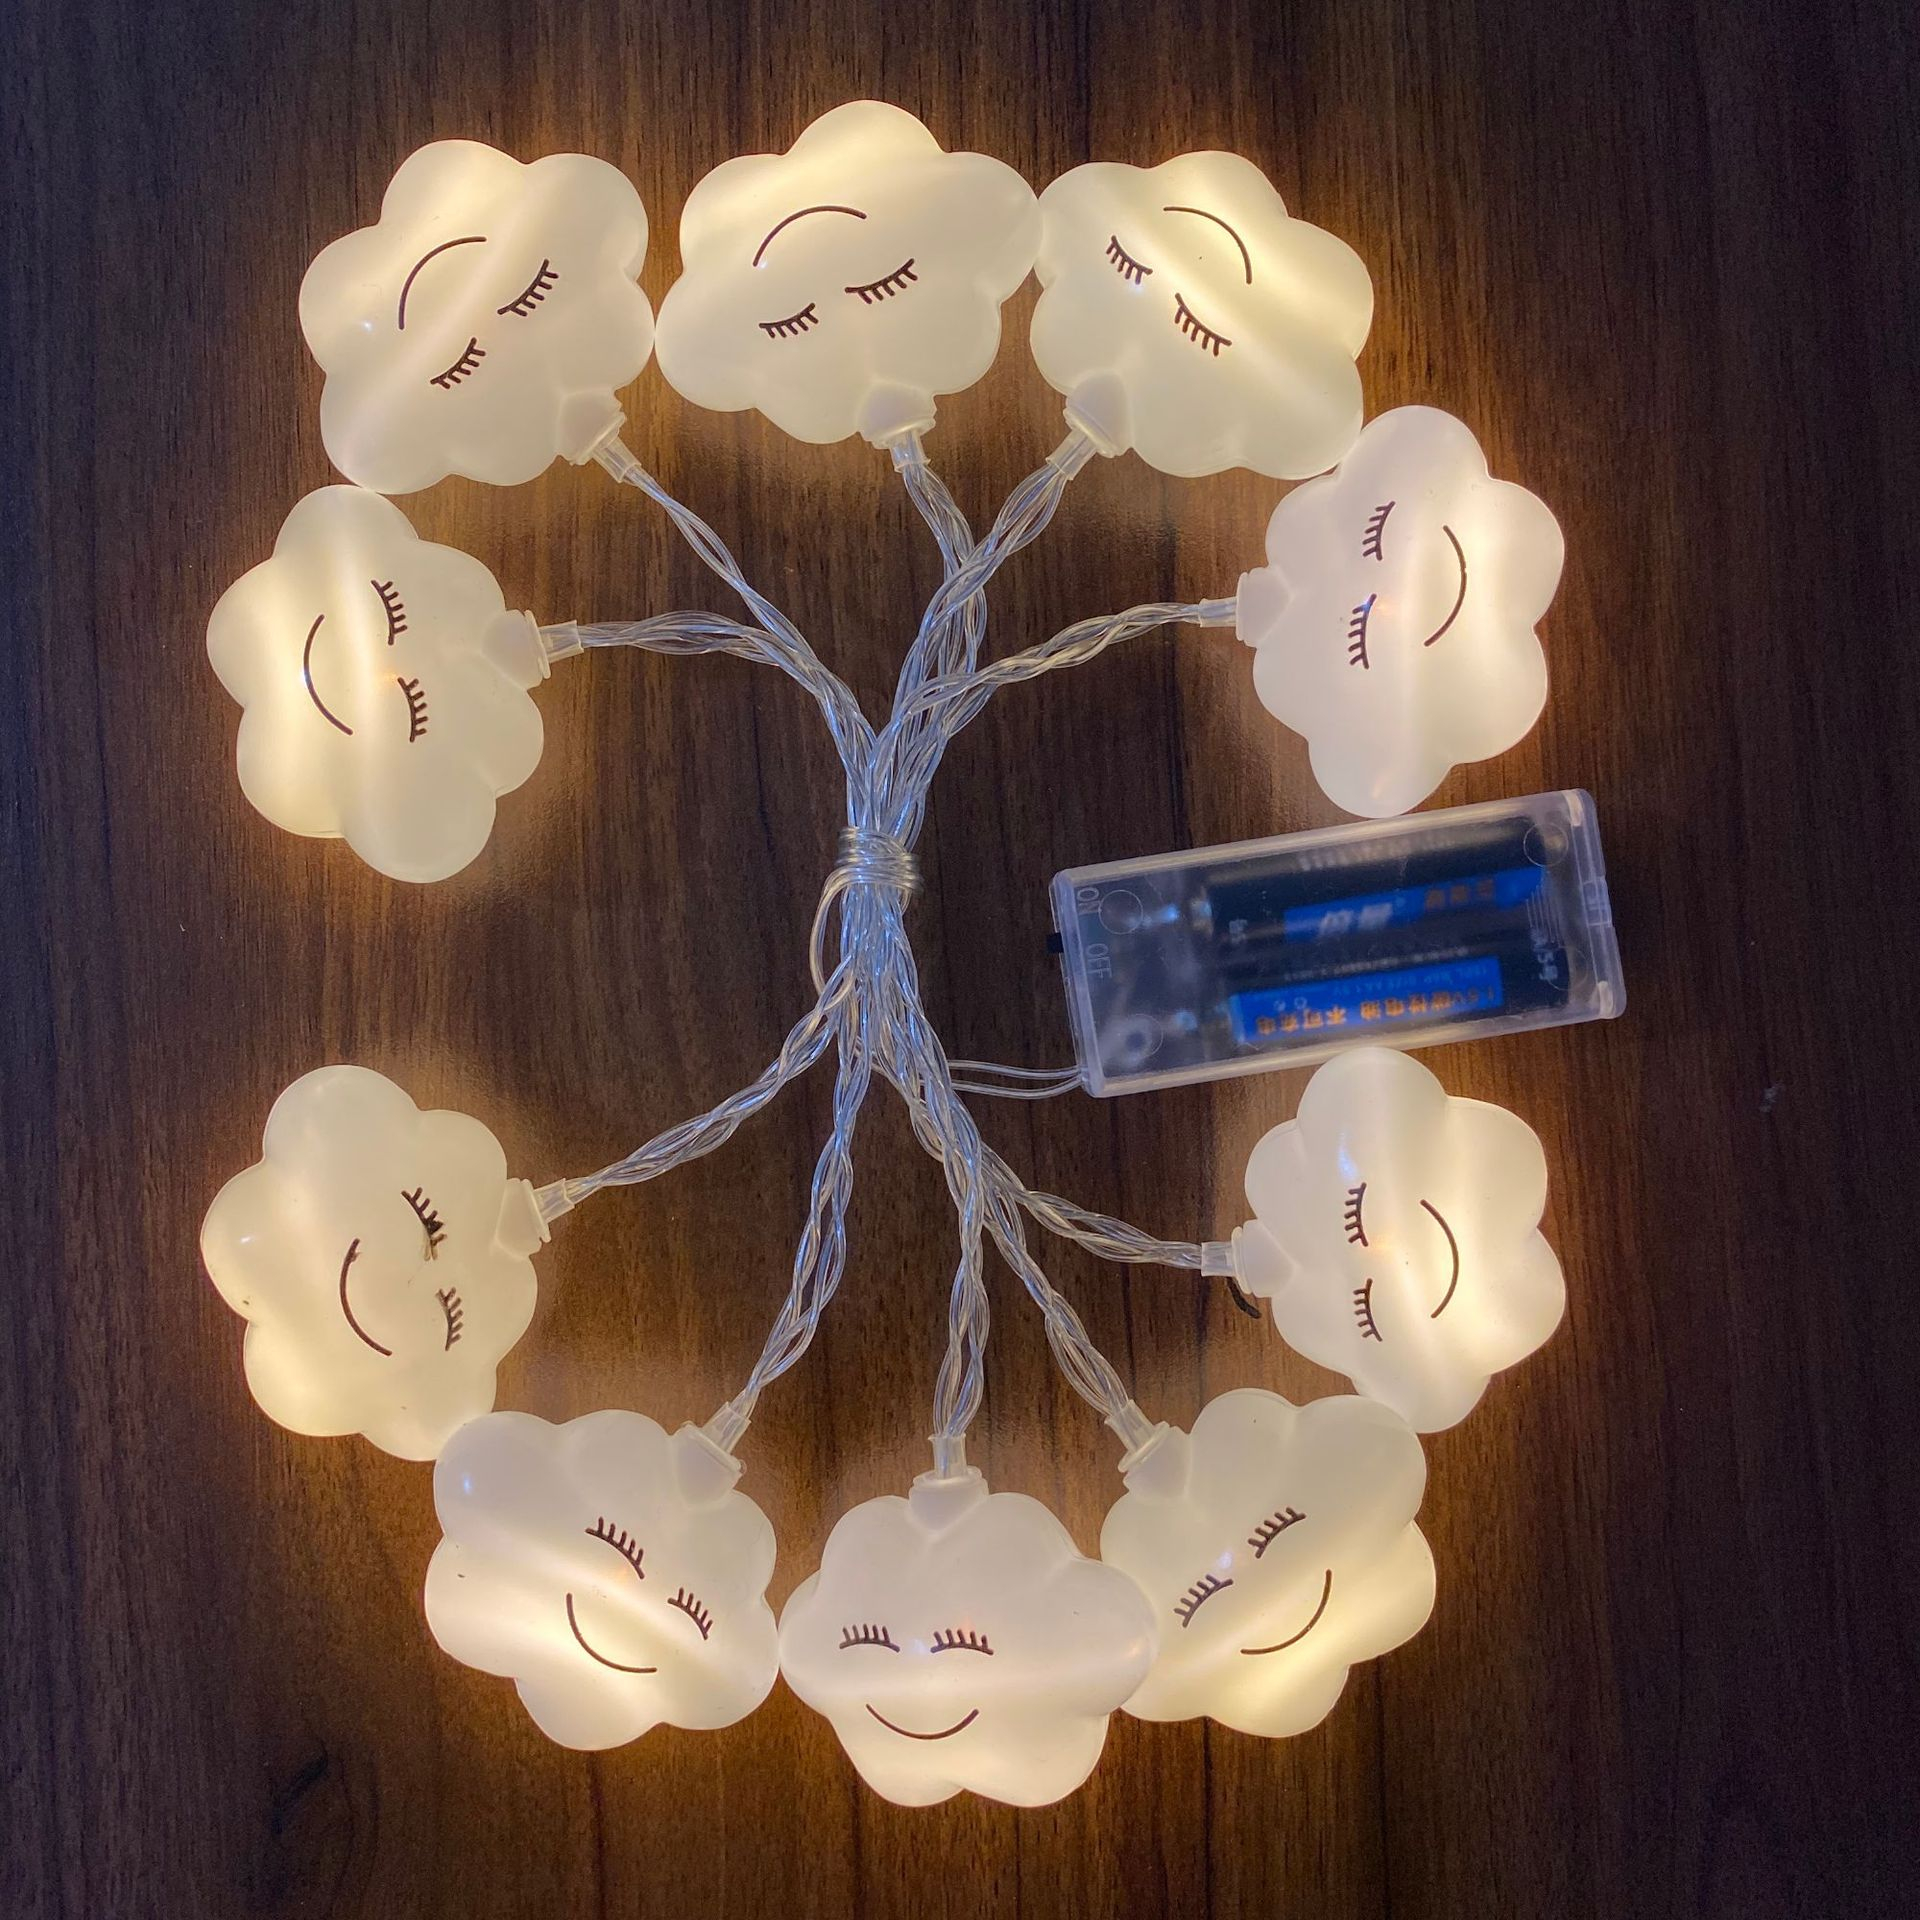 LED Cloud Light String Cute Smiley White Cloud Children's Room Decoration Cartoon Night Light Battery Christmas Lantern